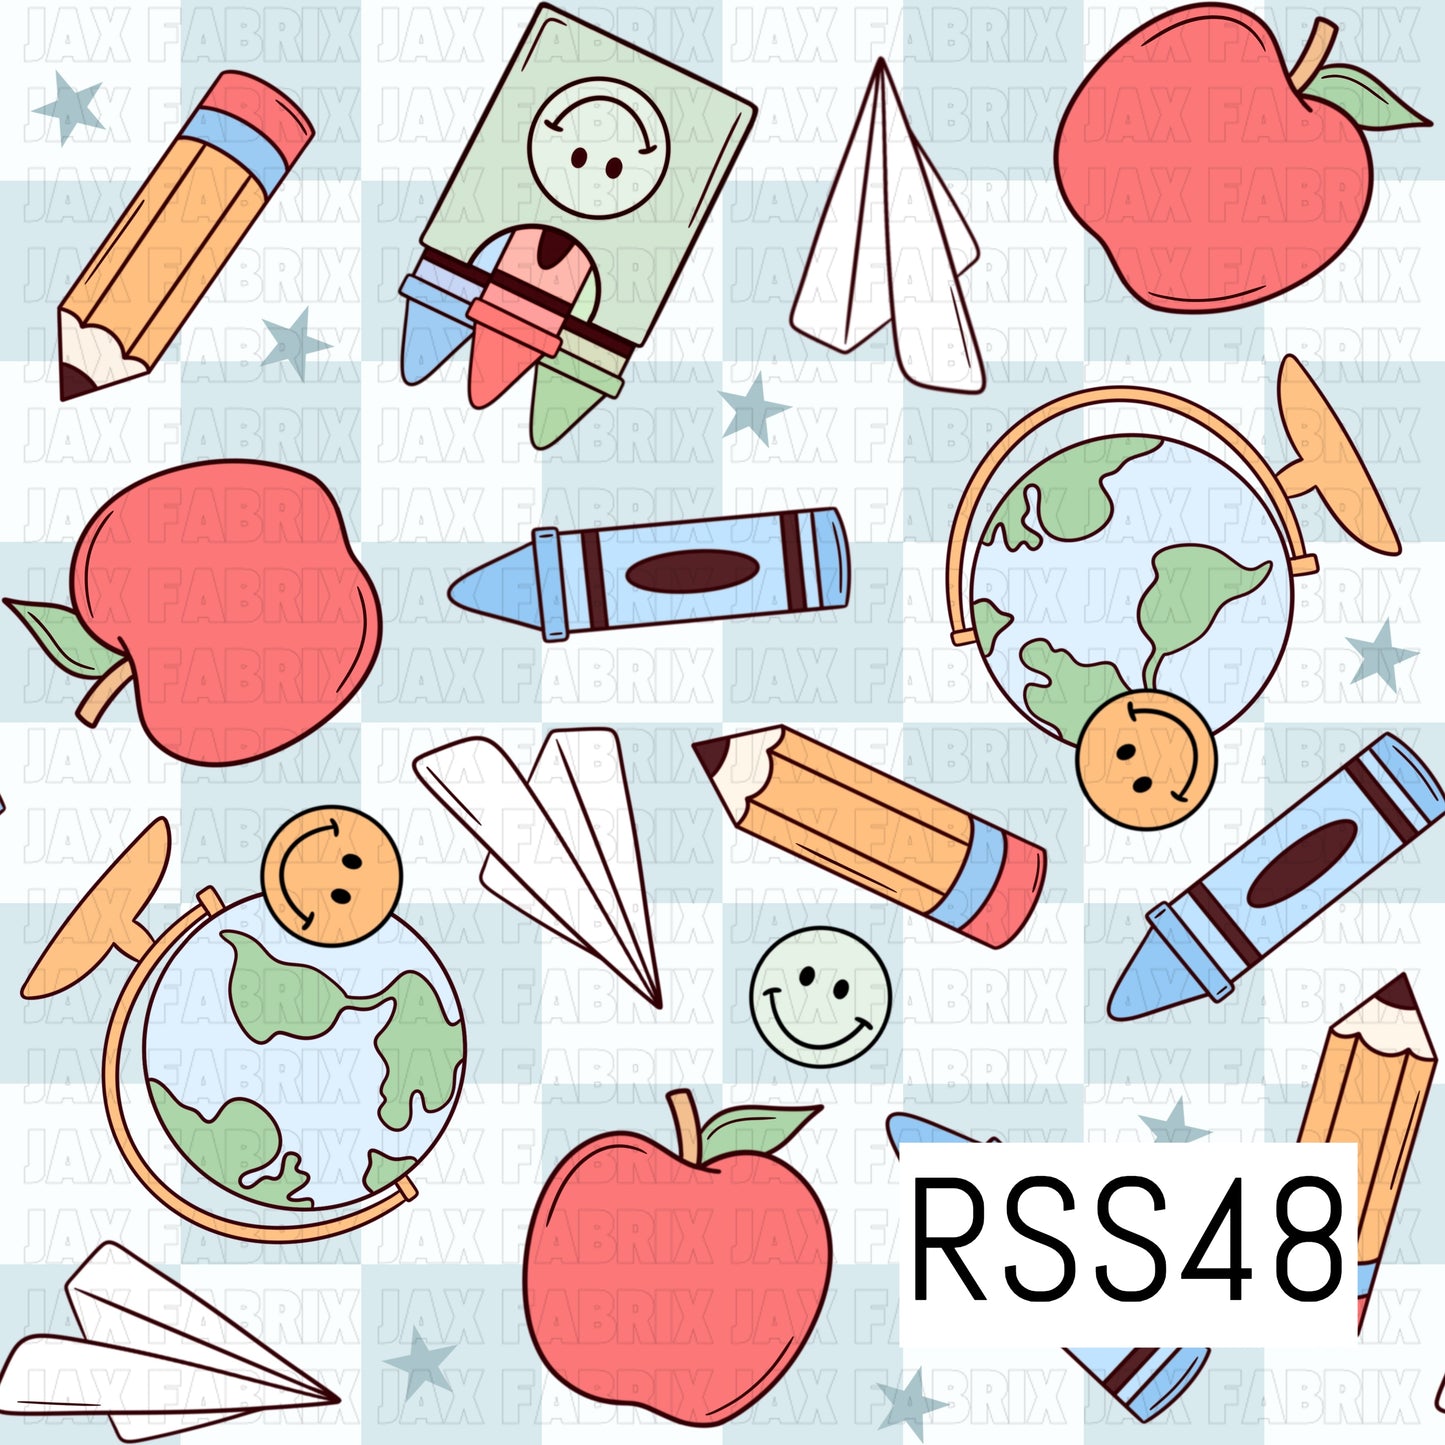 RSS48